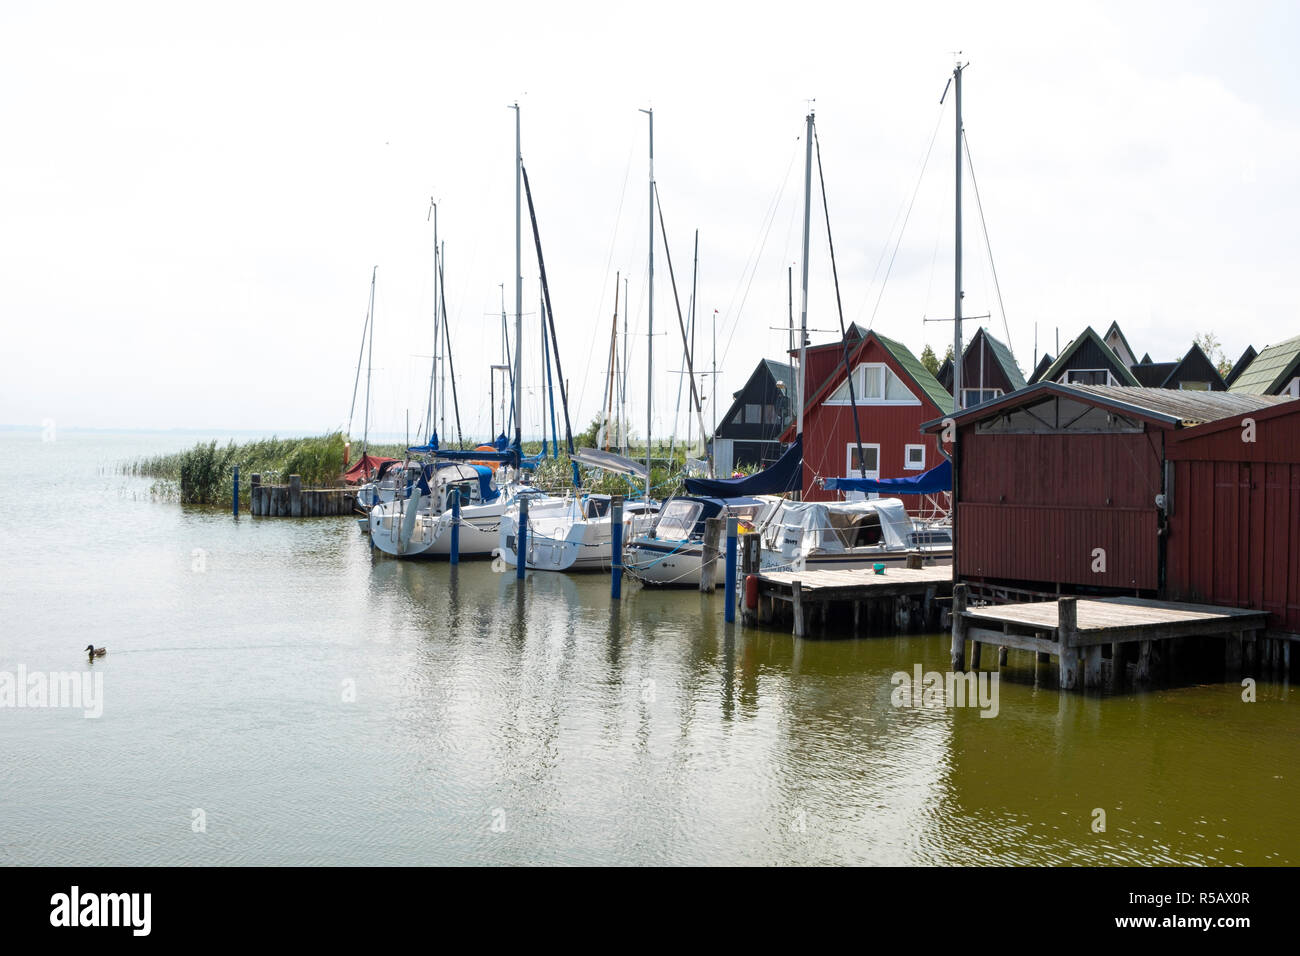 Sailboats in the harbor, Althagen near Ahrenshoop, Darss Fischland Zingst, Mecklenburg-Western Pomerania, Germany Stock Photo